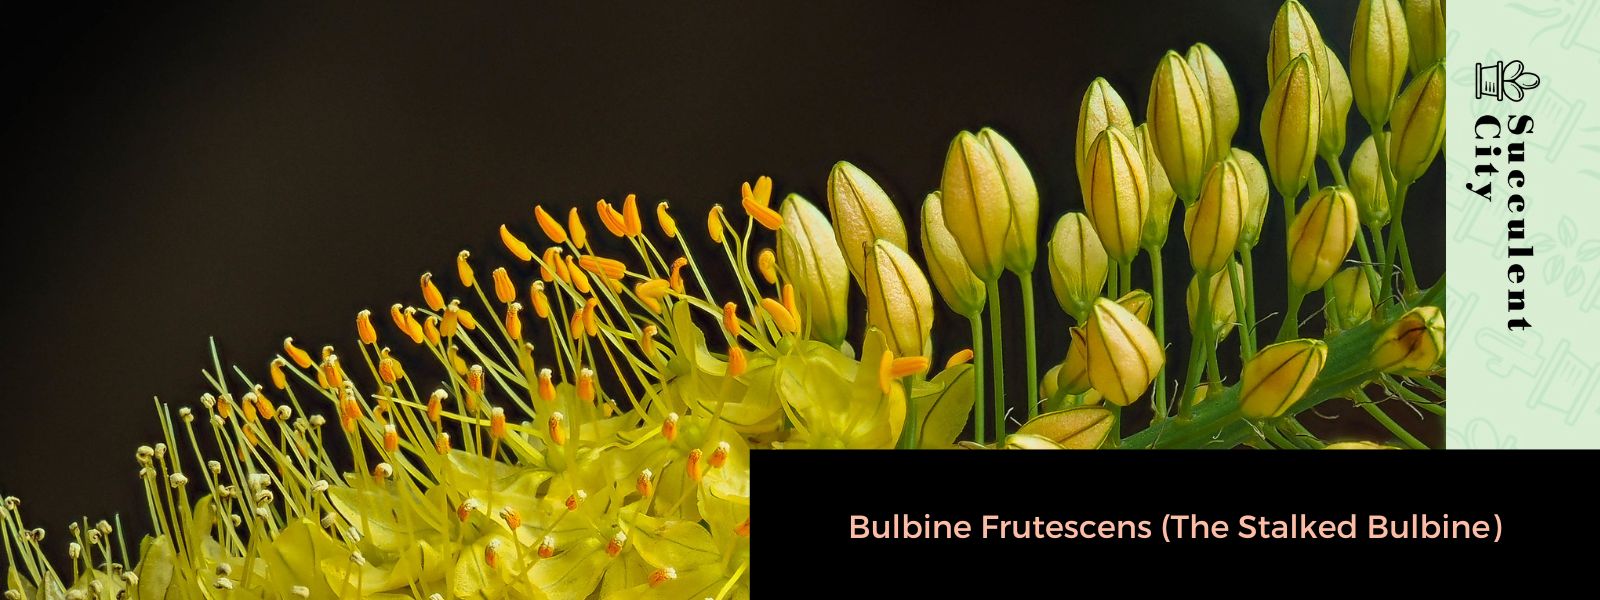 Bulbine Frutescens (El bulbine acechado)